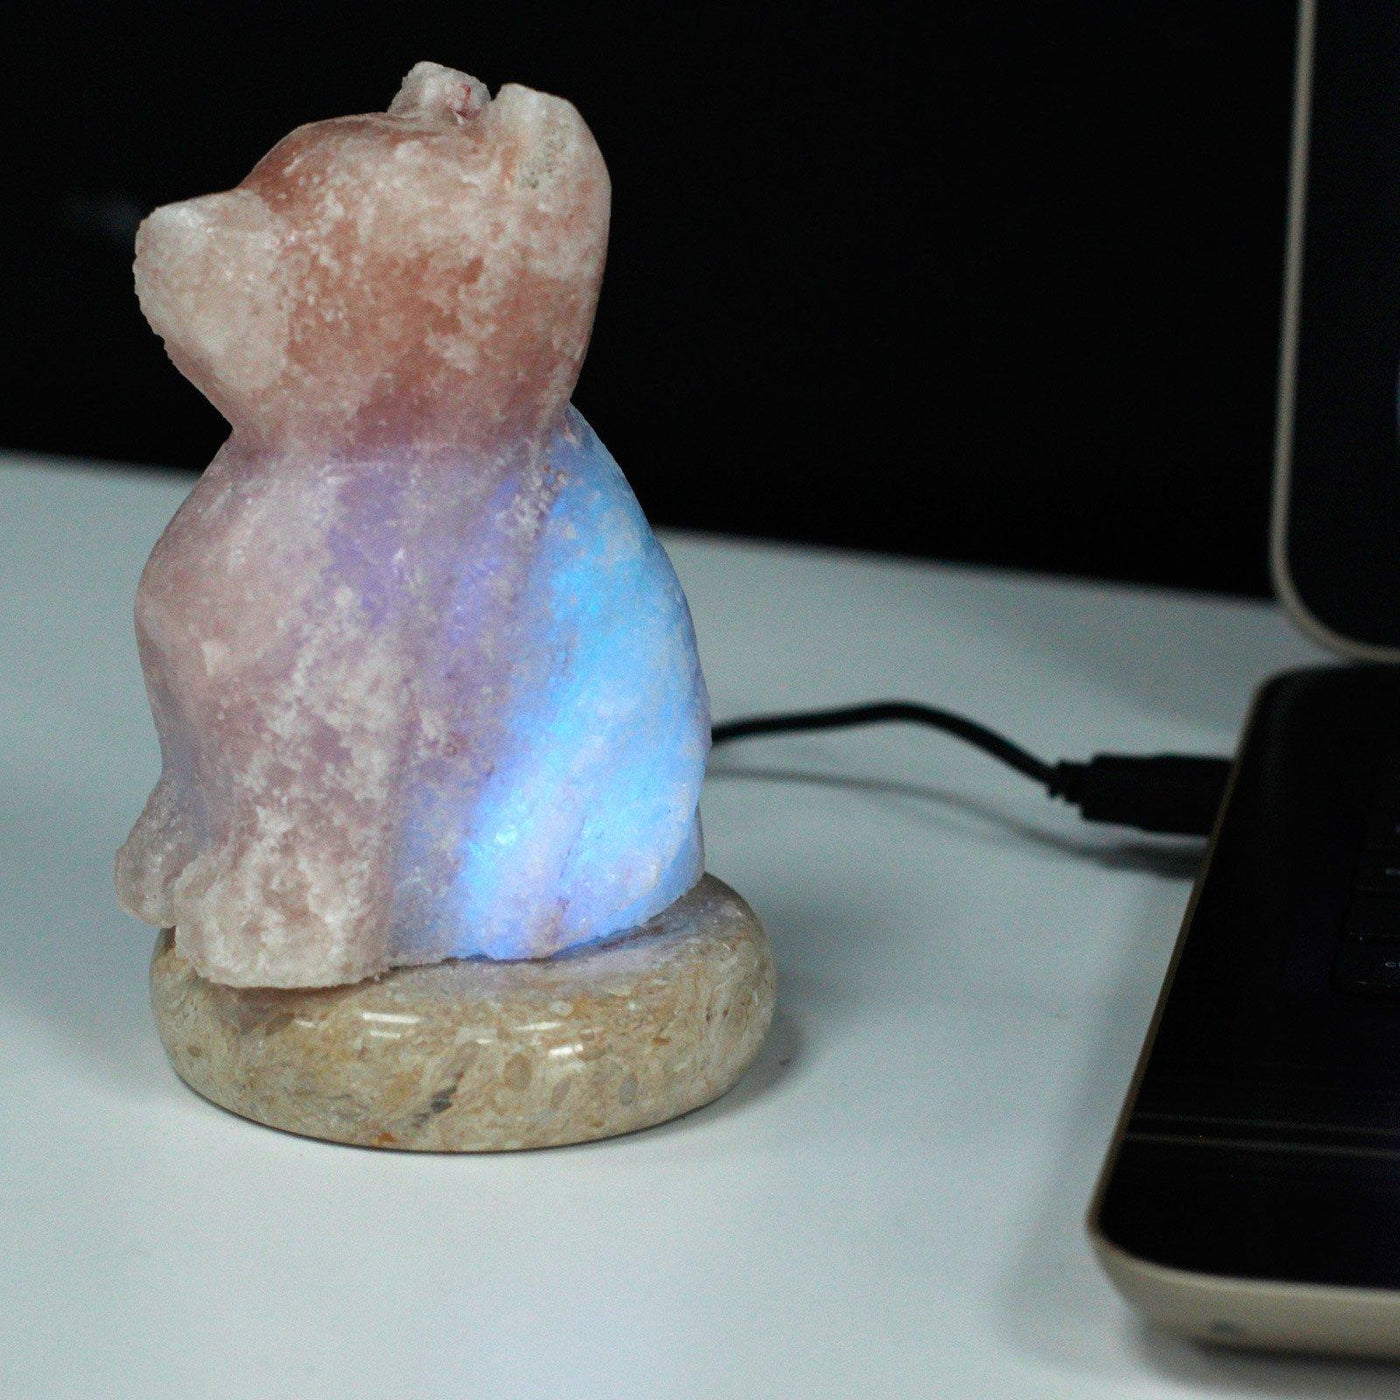 Small USB Colour Changing Dog Shaped Himalayan Salt Lamp